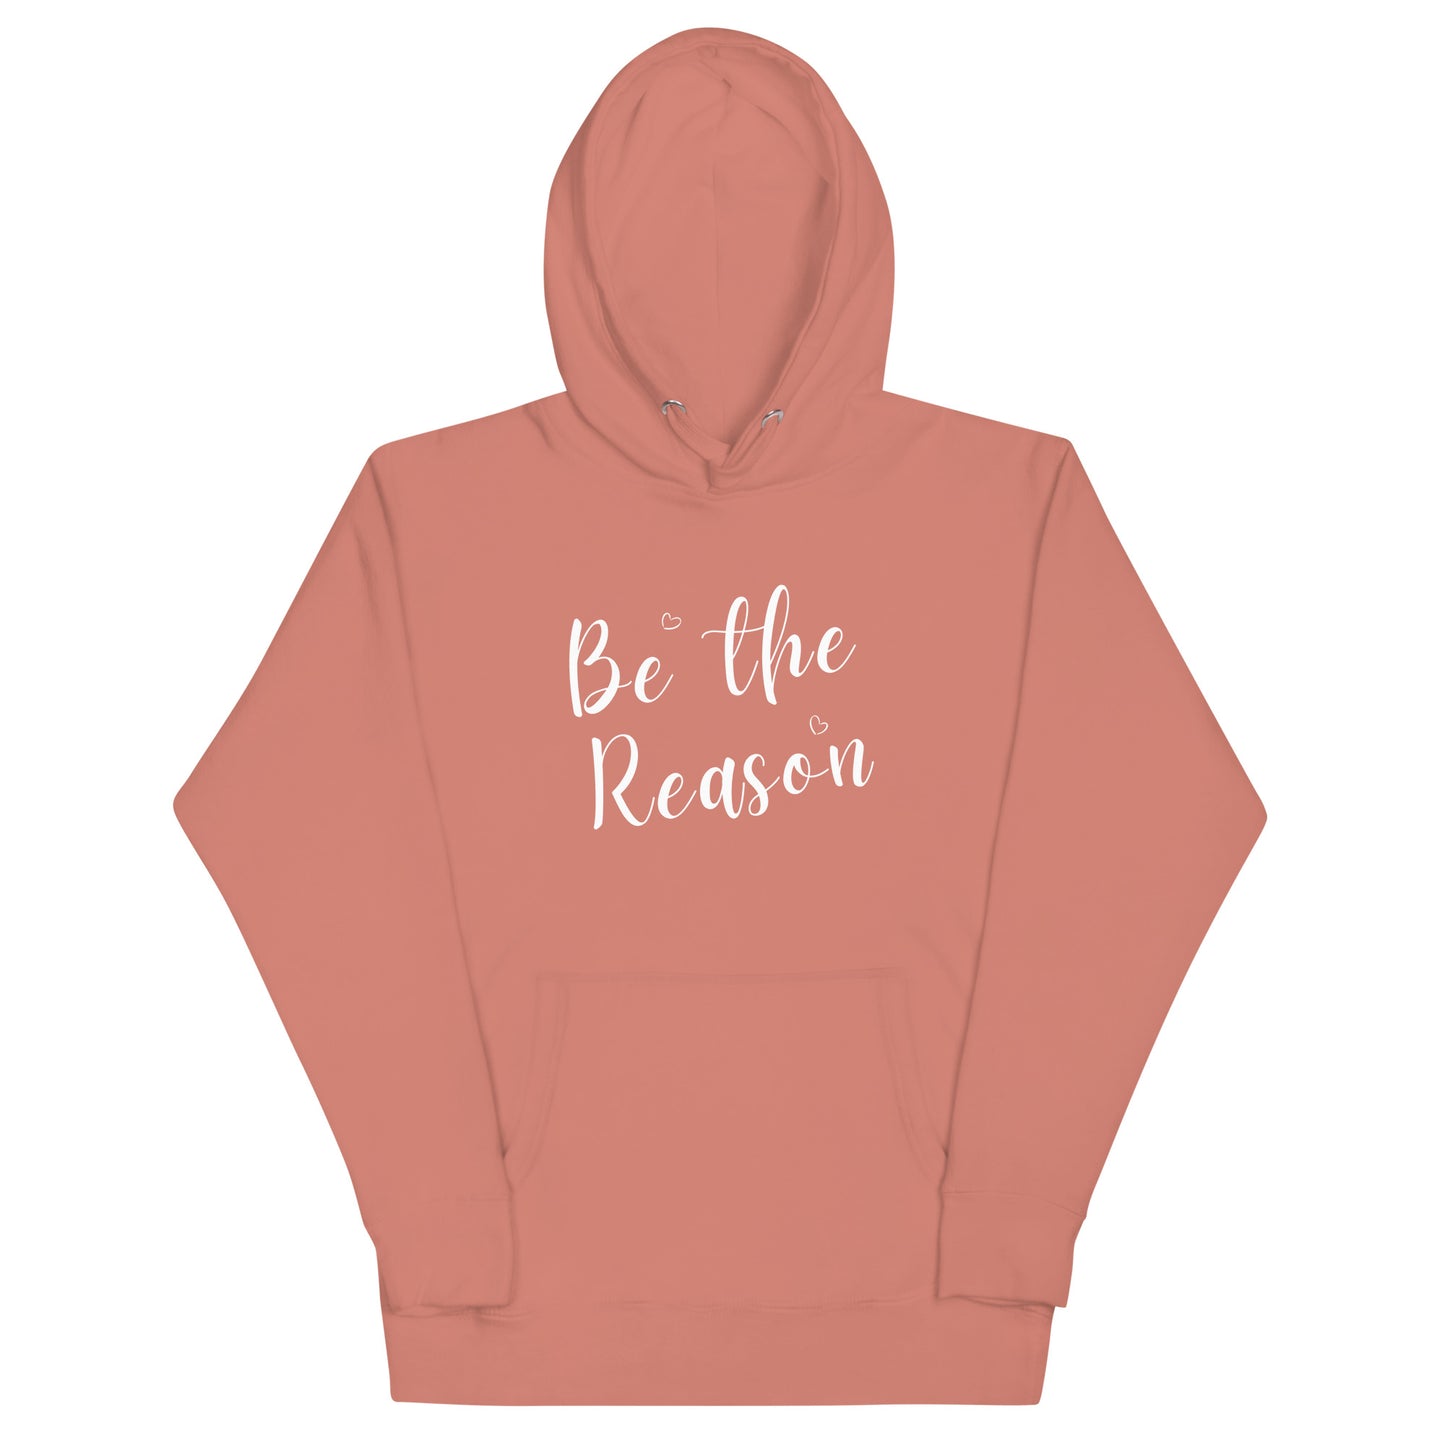 Be the Reason! Inspirational Sweatshirt